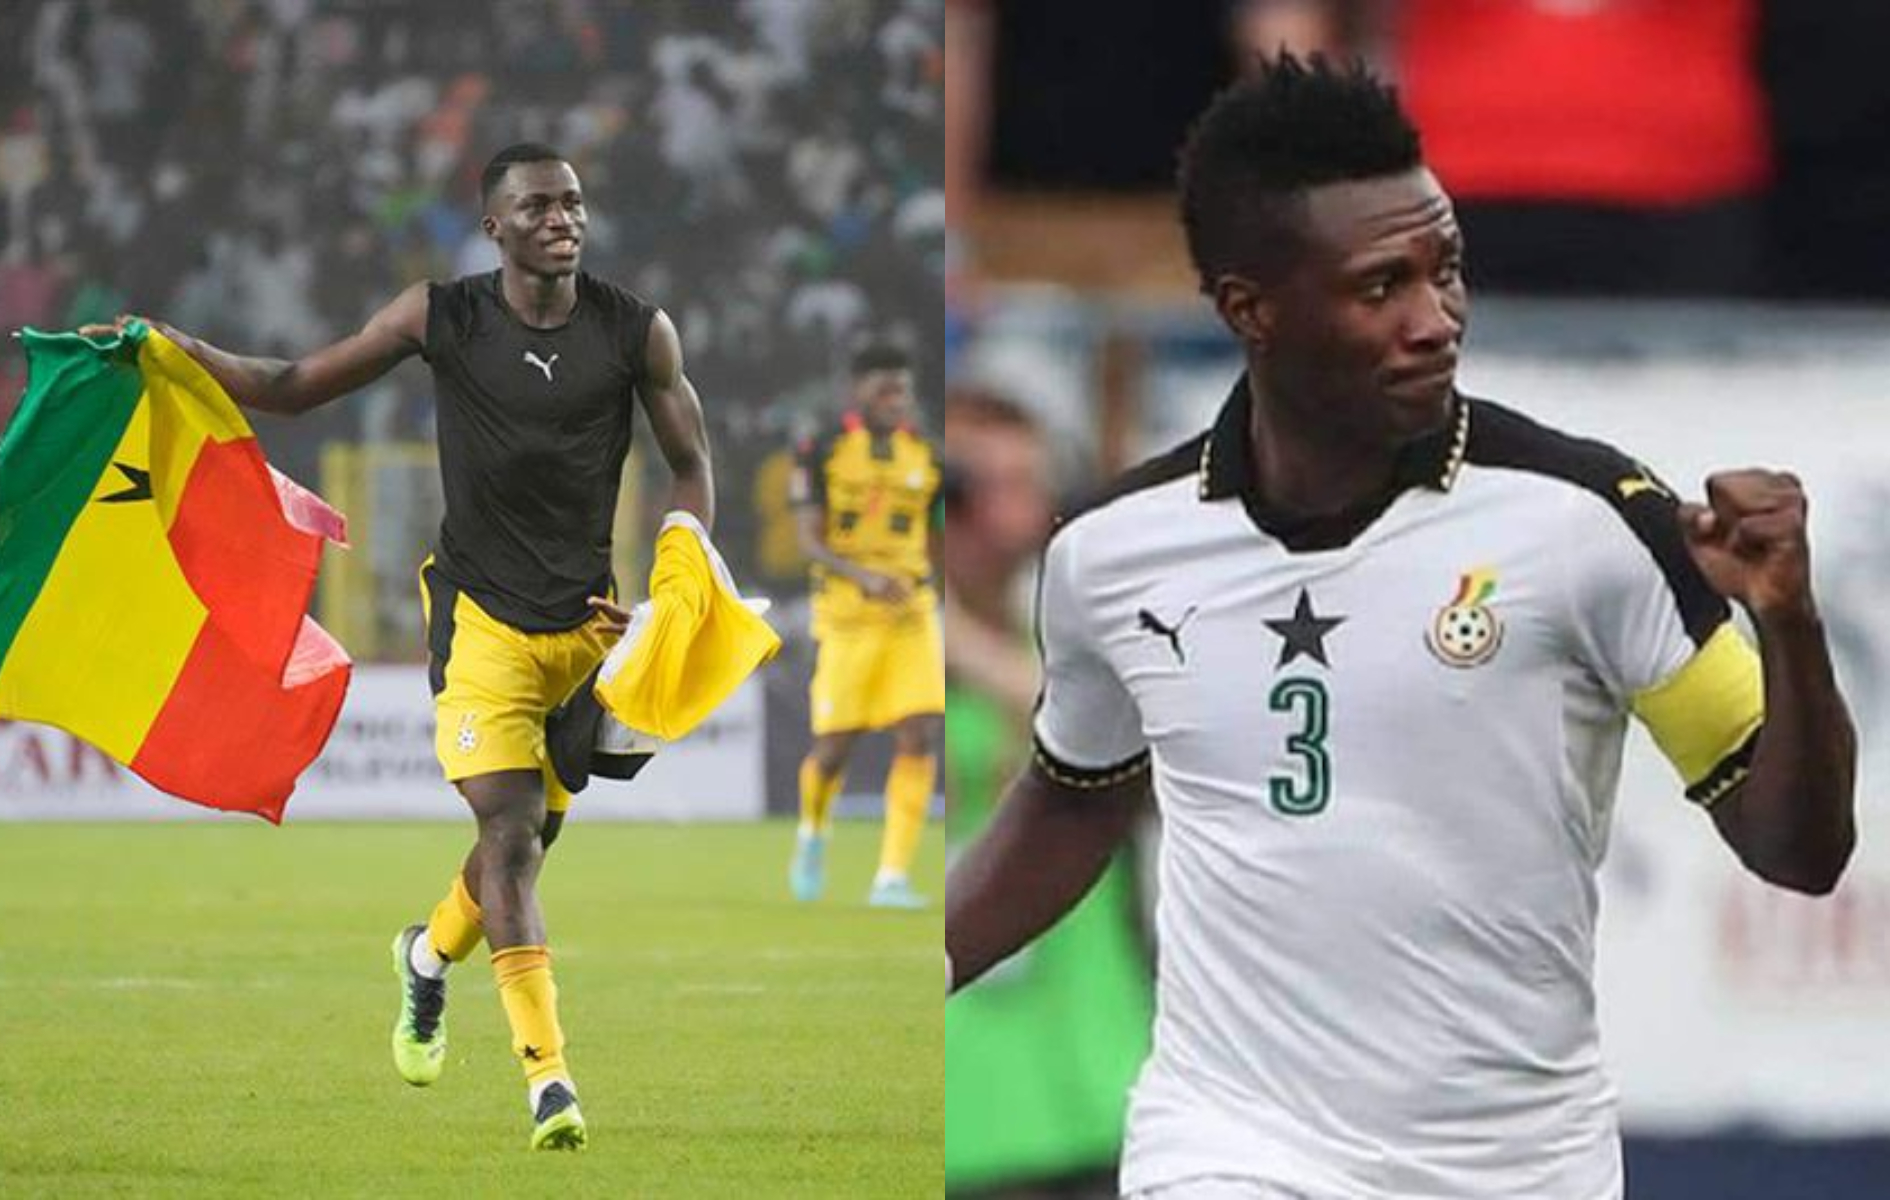 ‘Afena-Gyan is very good but don’t put pressure on him’ – Asamoah Gyan